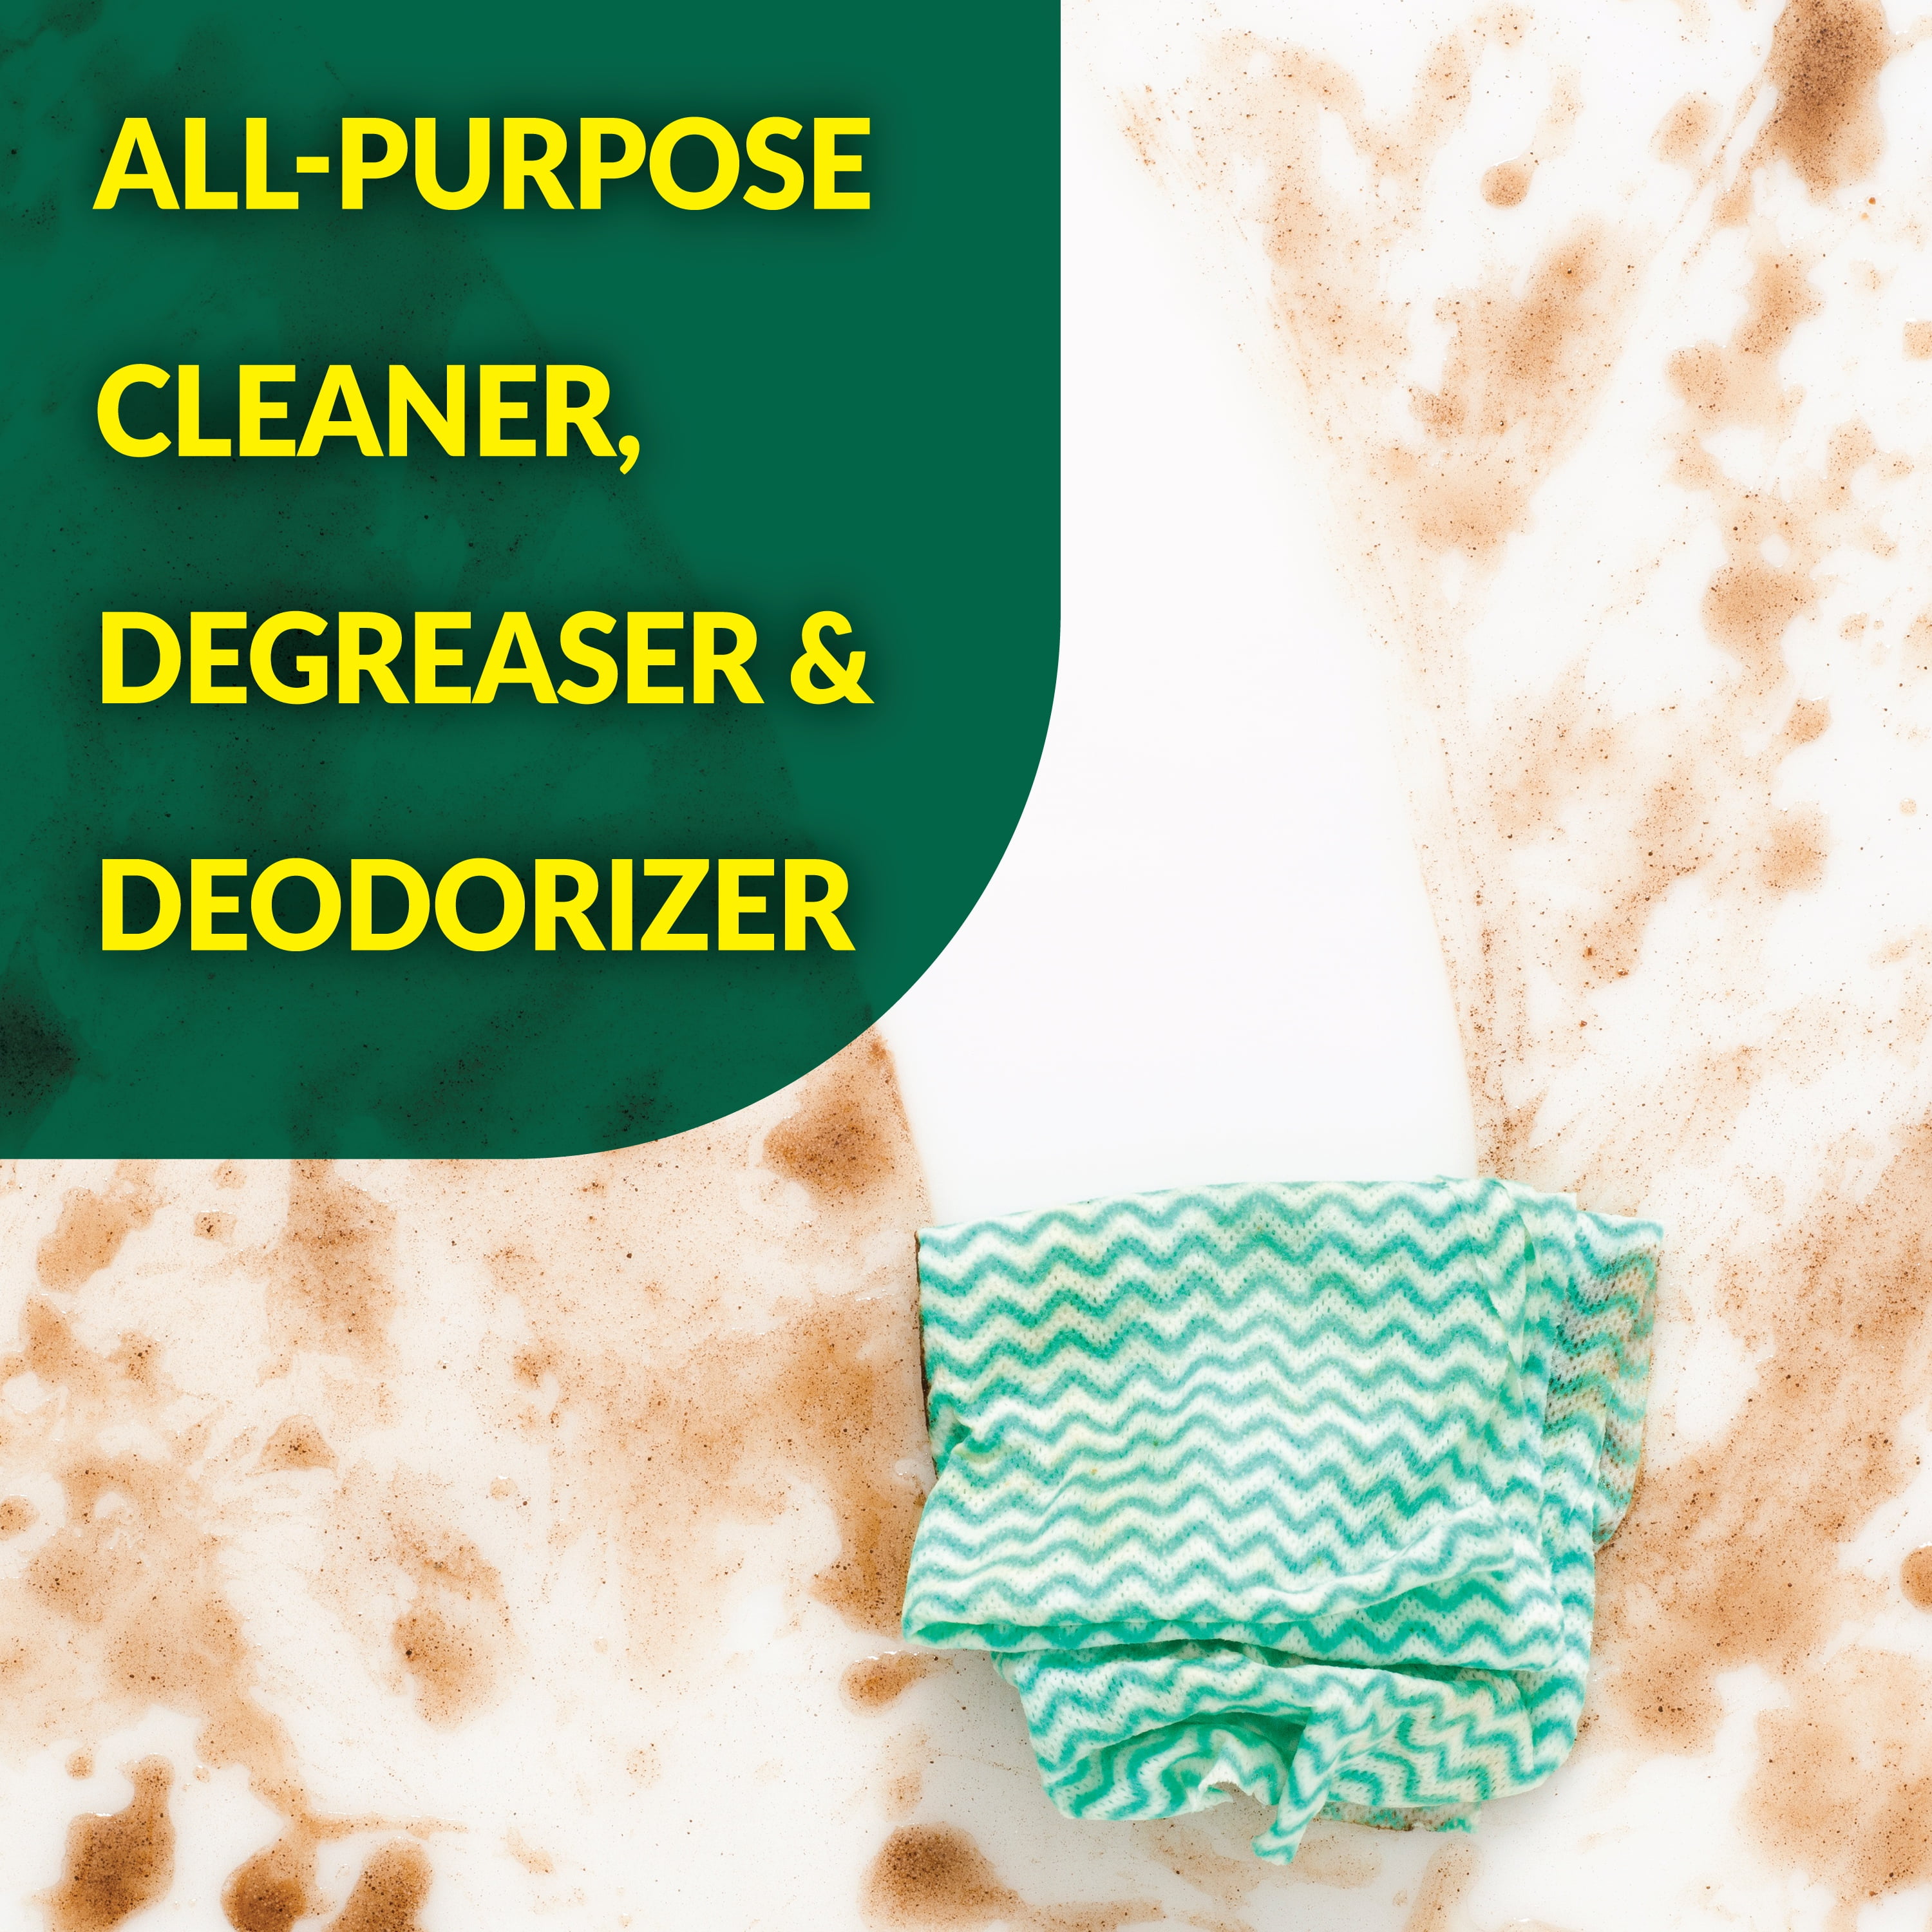 Simple Green Clean Building Bathroom Cleaner - Concentrate Liquid - 128 fl  oz (4 quart) - 2 / Carton - Pink - R&A Office Supplies